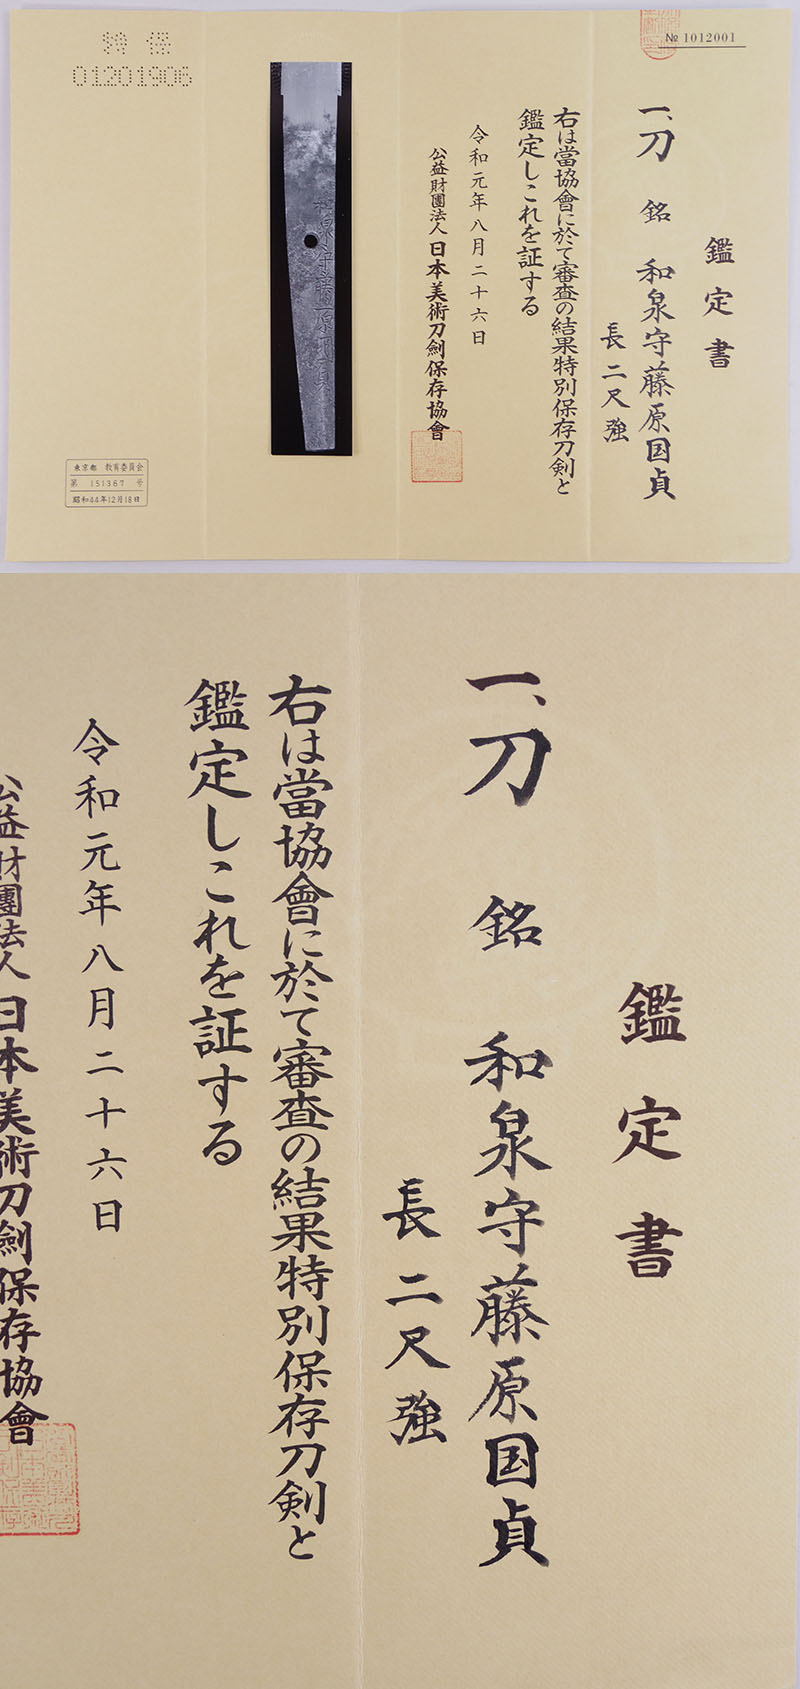 和泉守藤原国貞(親国貞) Picture of Certificate